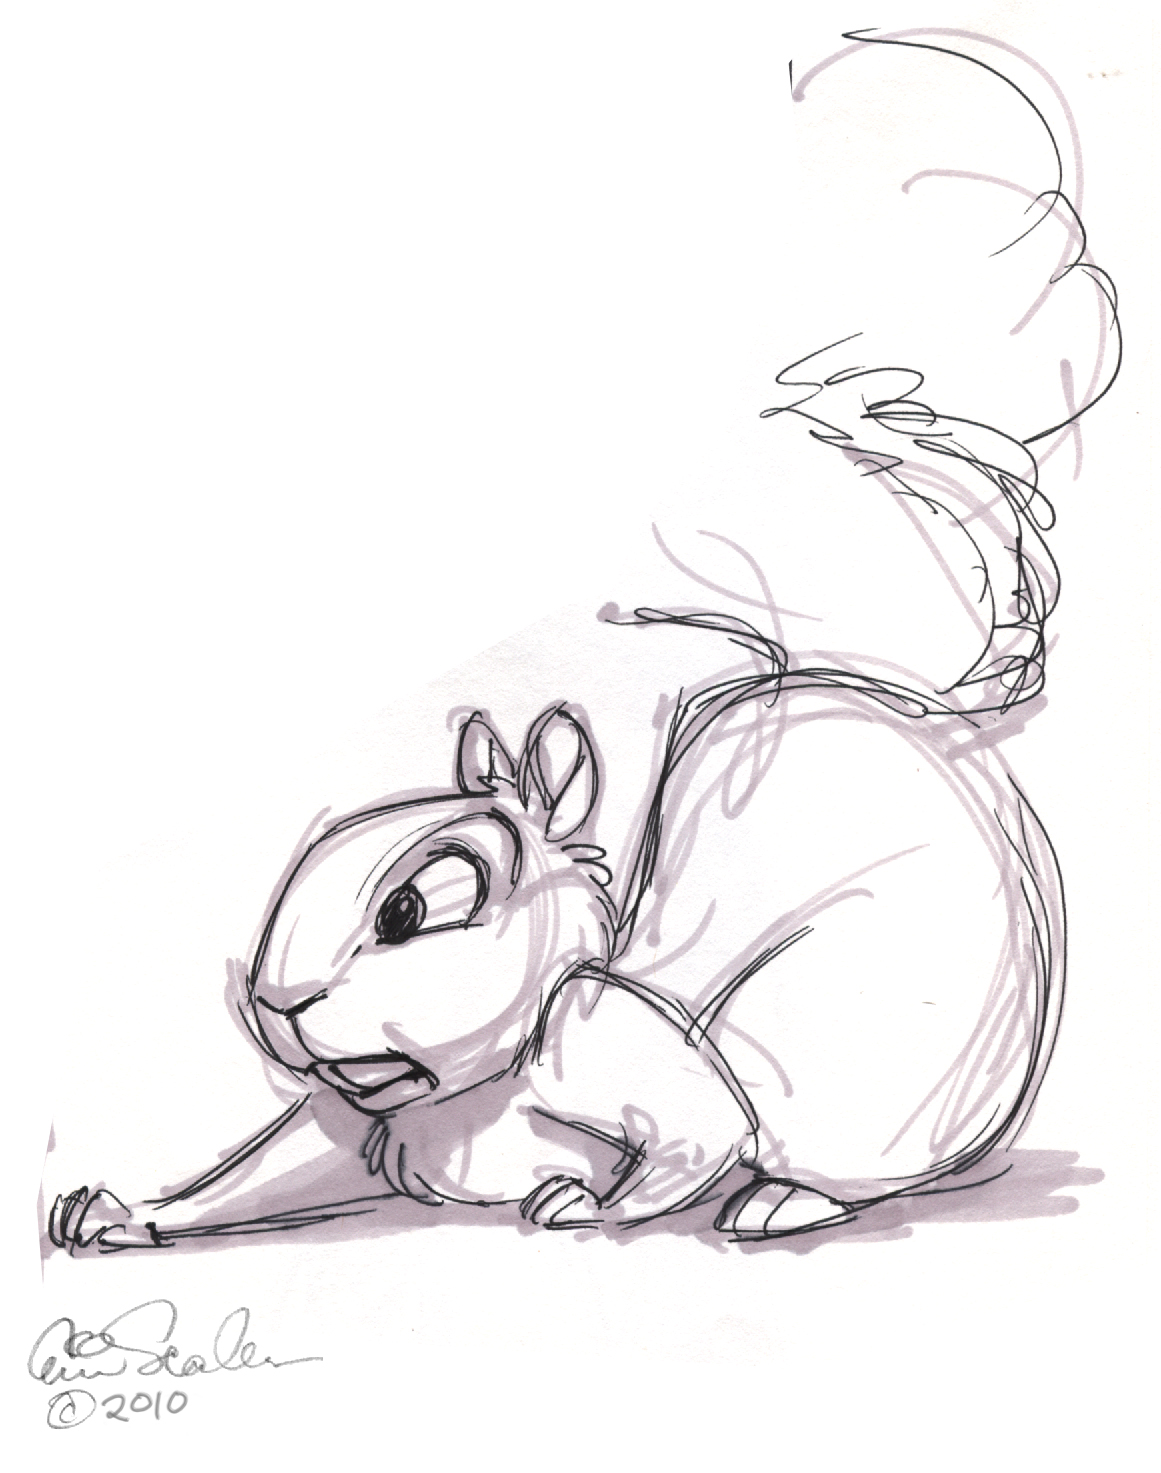 The Ol' Sketchbook: Some Squirrels